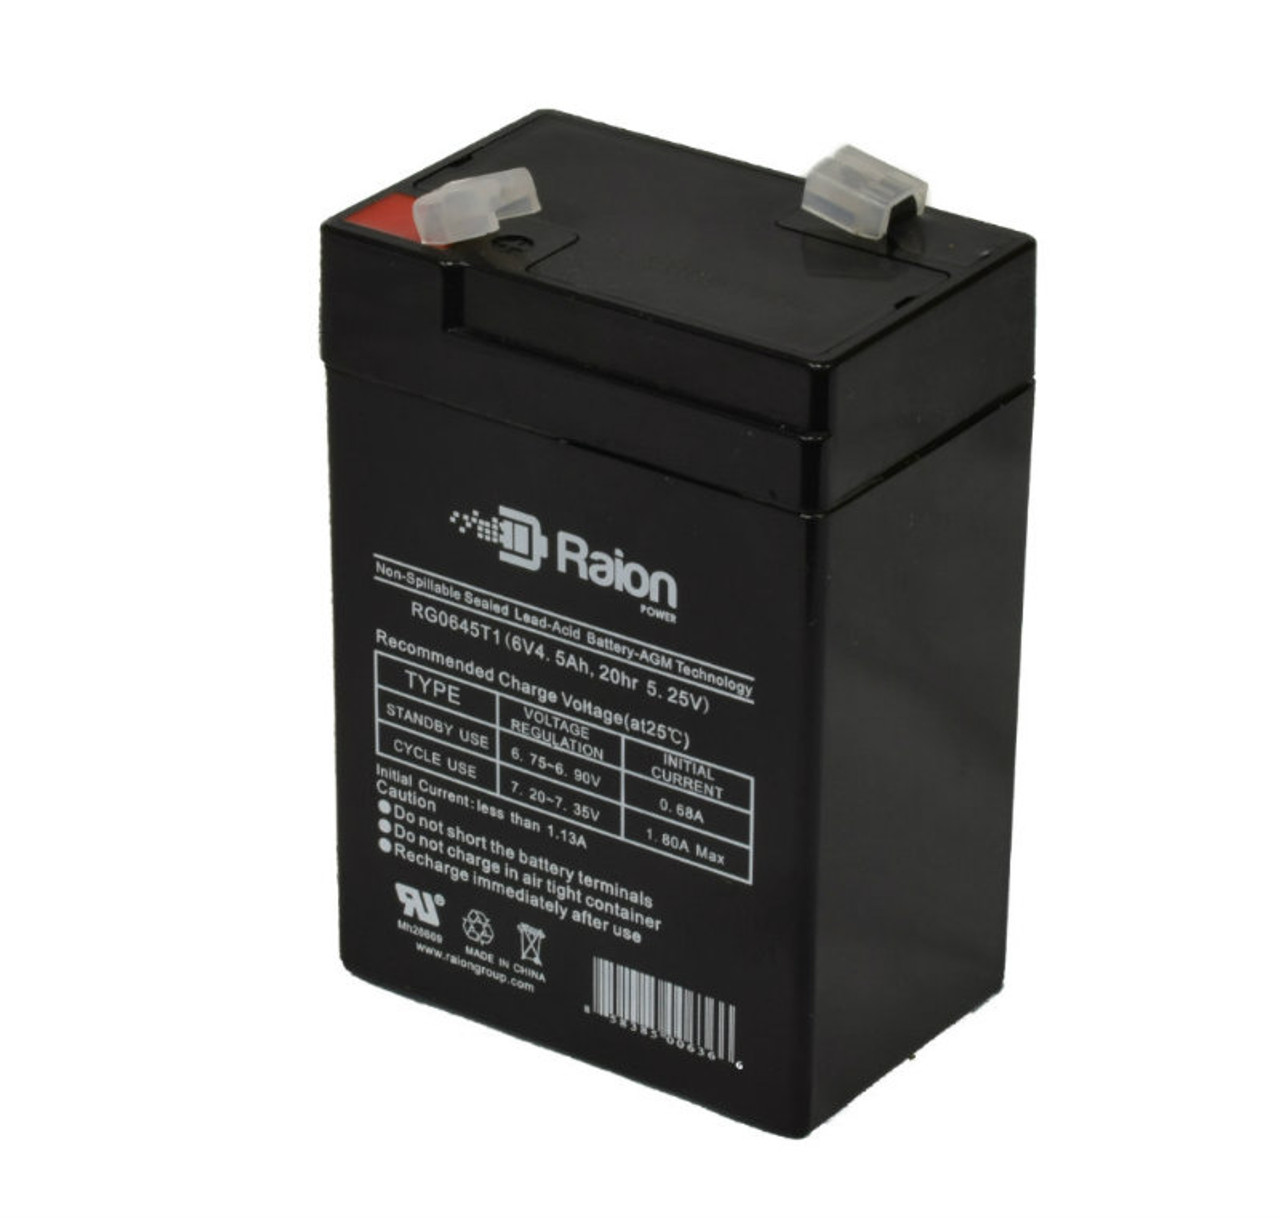 Raion Power RG0645T1 6V 4.5Ah Replacement Battery Cartridge for Emergi-Lite SMX